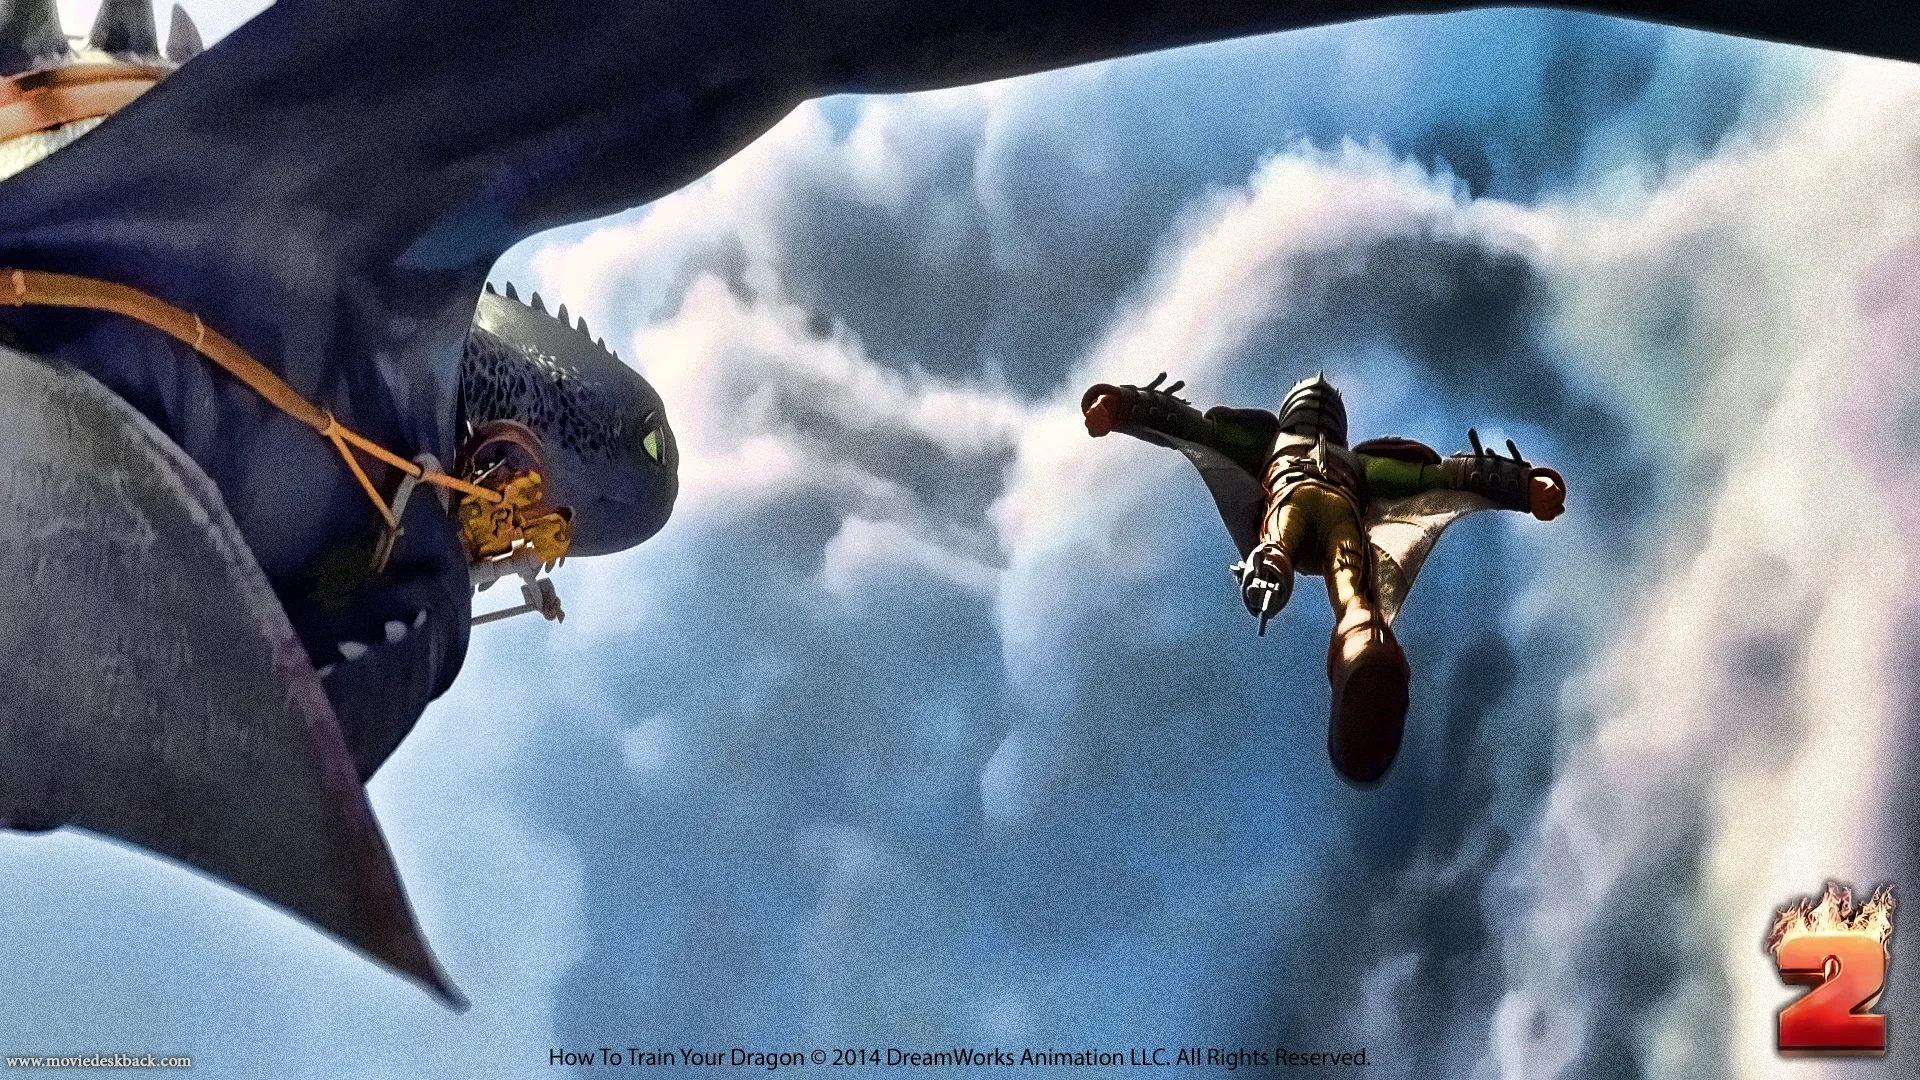 How to train dragon 2. Беззубик 2. HTTYD обои. Дракон полёт вид сверху. Летающий персонаж Дримворкс.